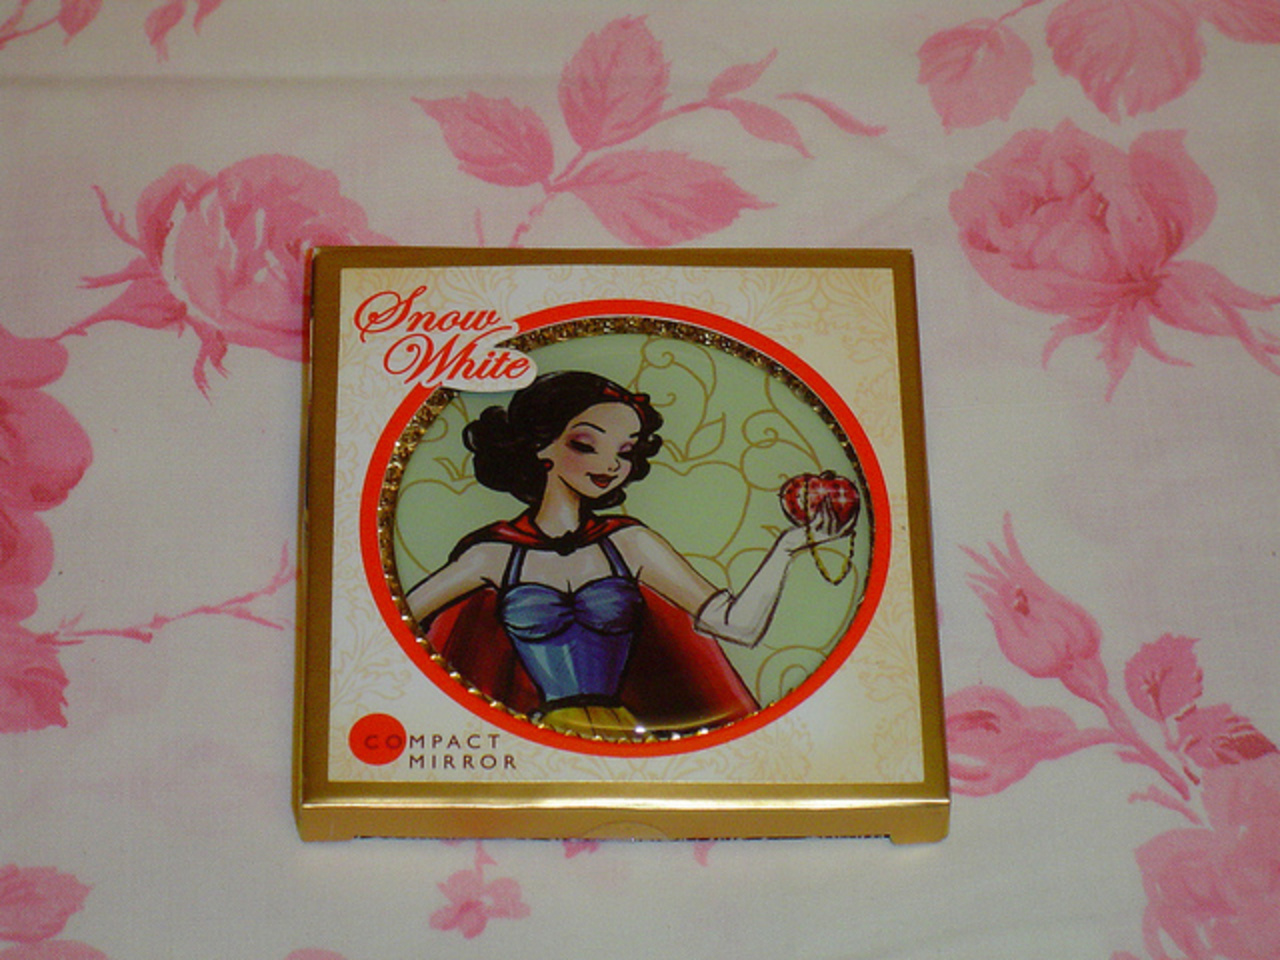 Snow White Designer Compact Mirror in Box | Flickr - Photo Sharing!